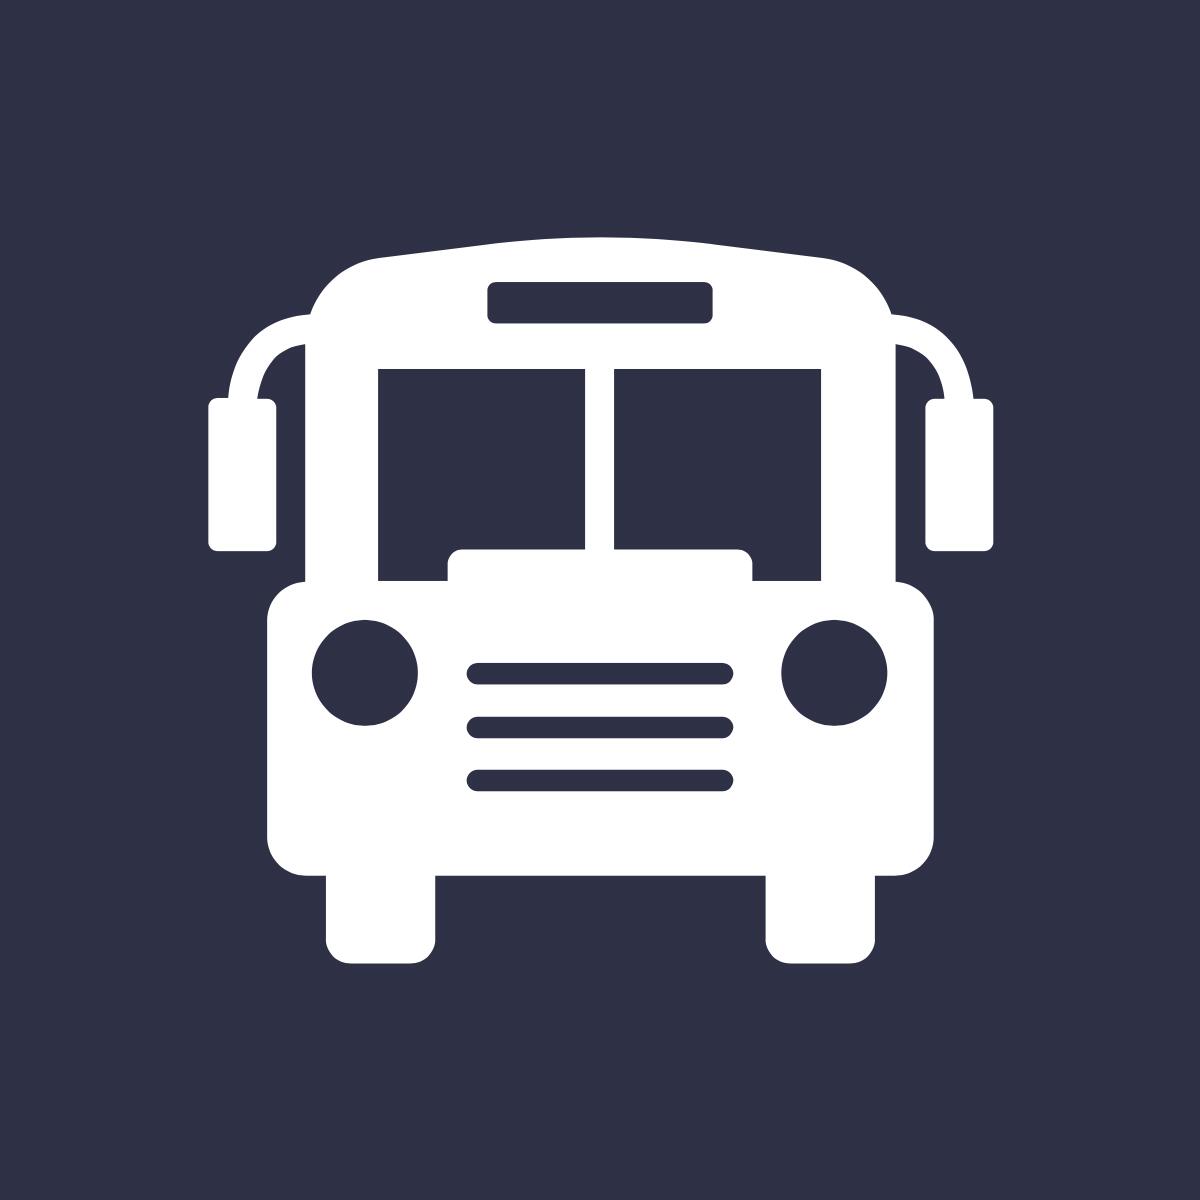 Transportation bus icon